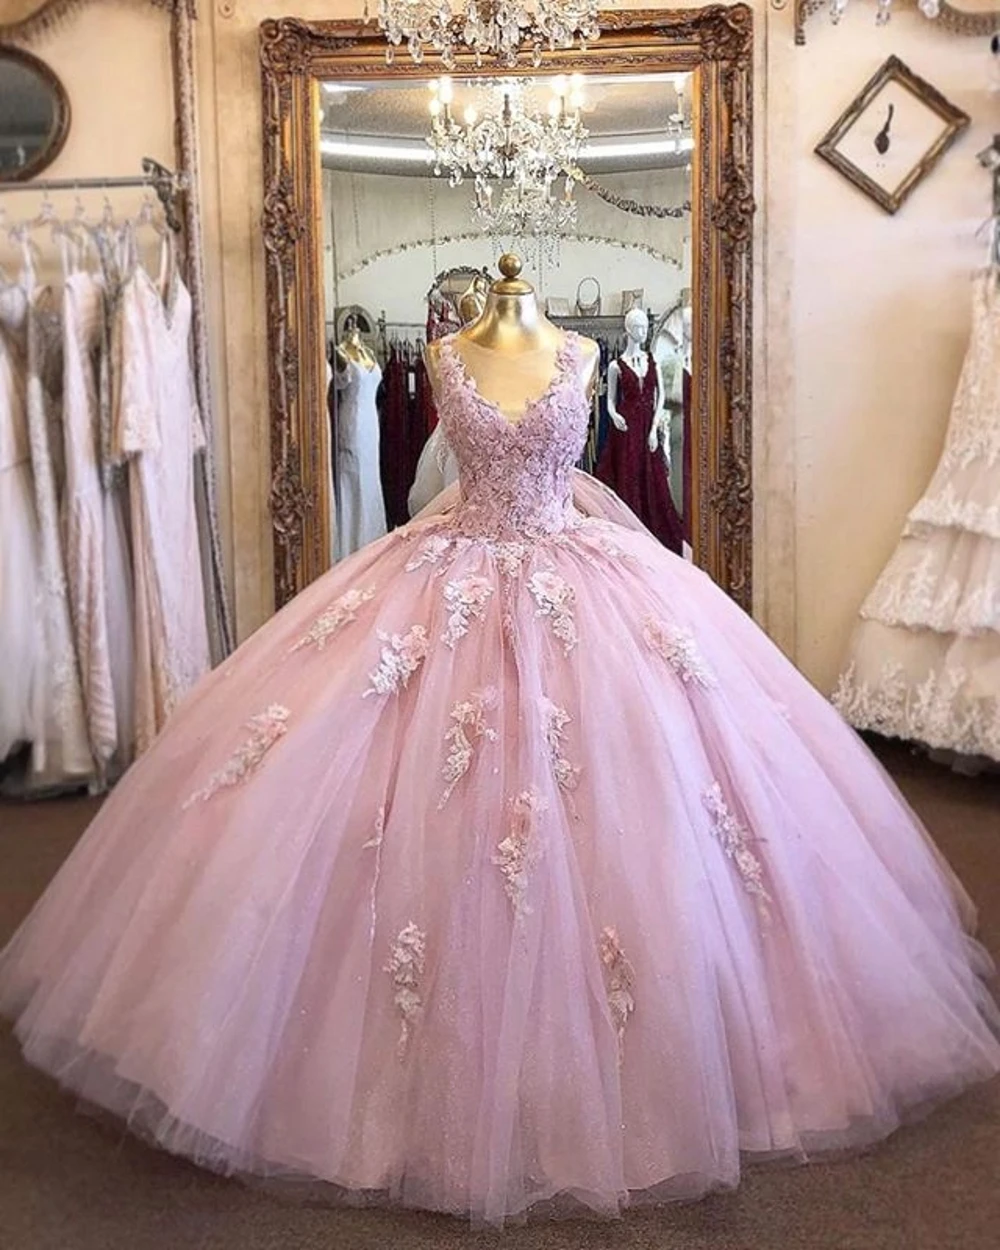 

Sweetheart Long Organza Quinceanera Dresses 2021 Big Floral Peplum Girls Pageant Dress Sweet 16 Ball Gown vestido debutante